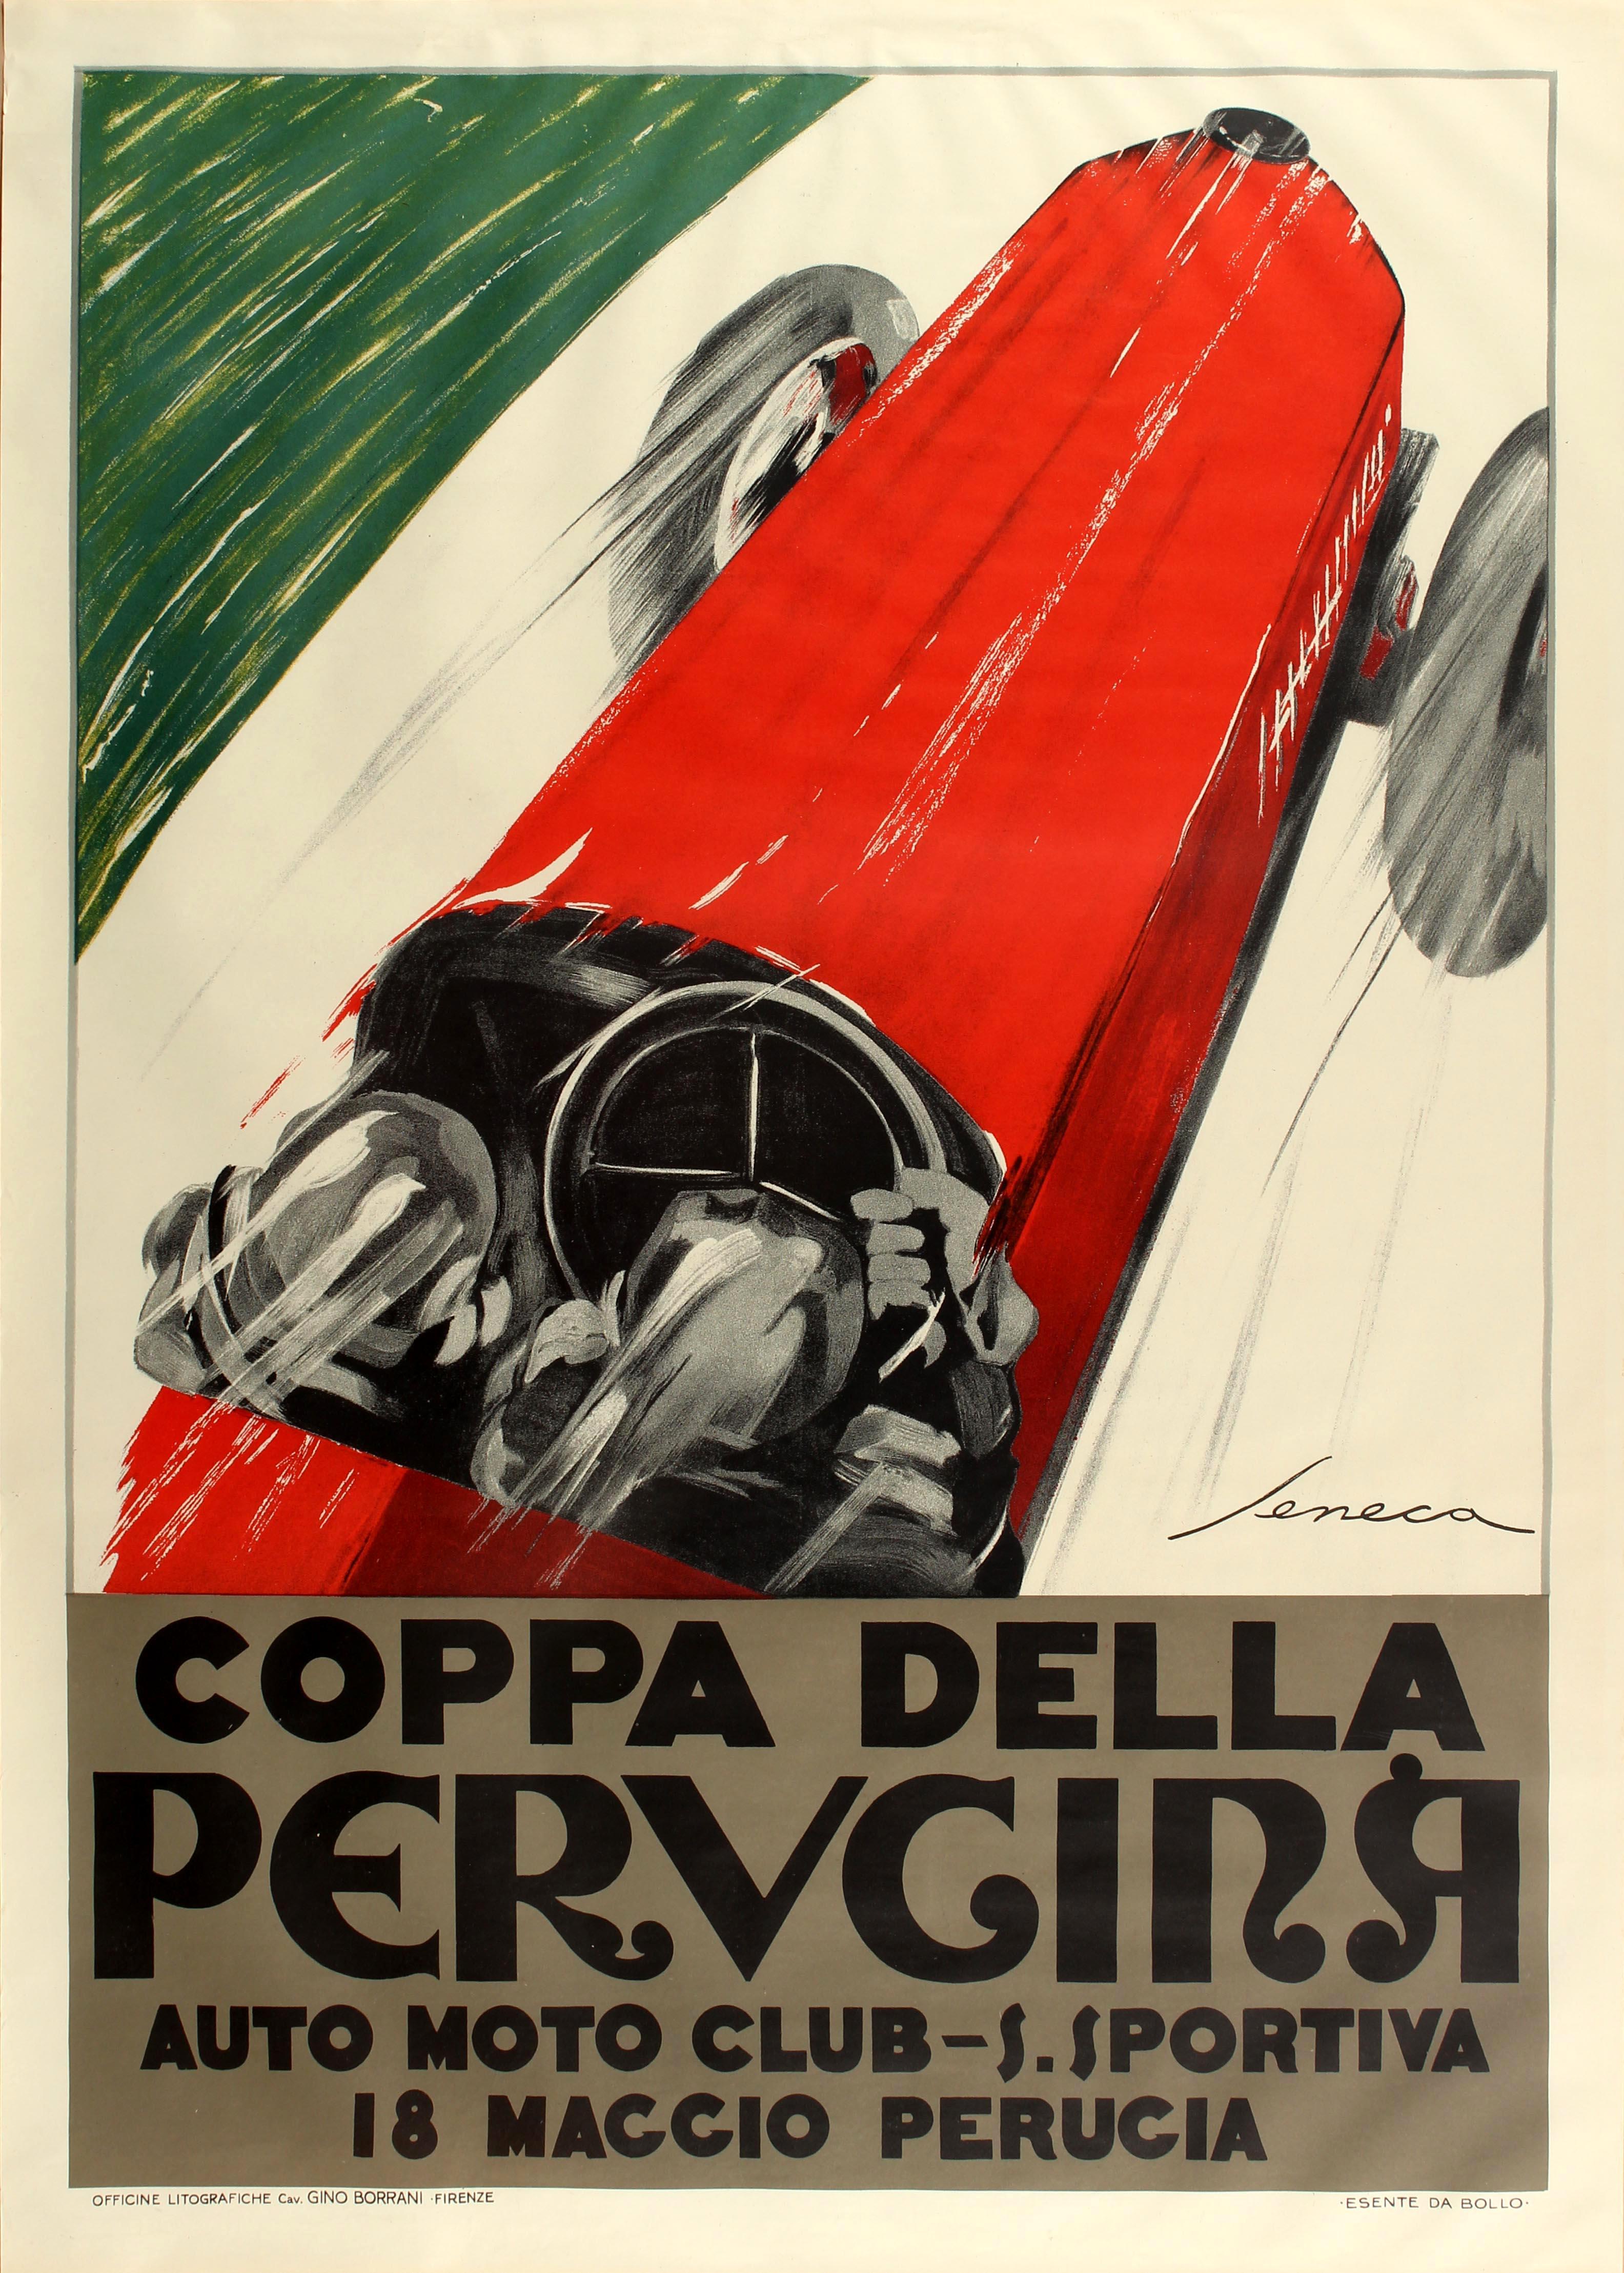 Federico Seneca Print - Large Coppa Della Perugina Sports Car Racing Poster Reissue 1990s Art Deco Style